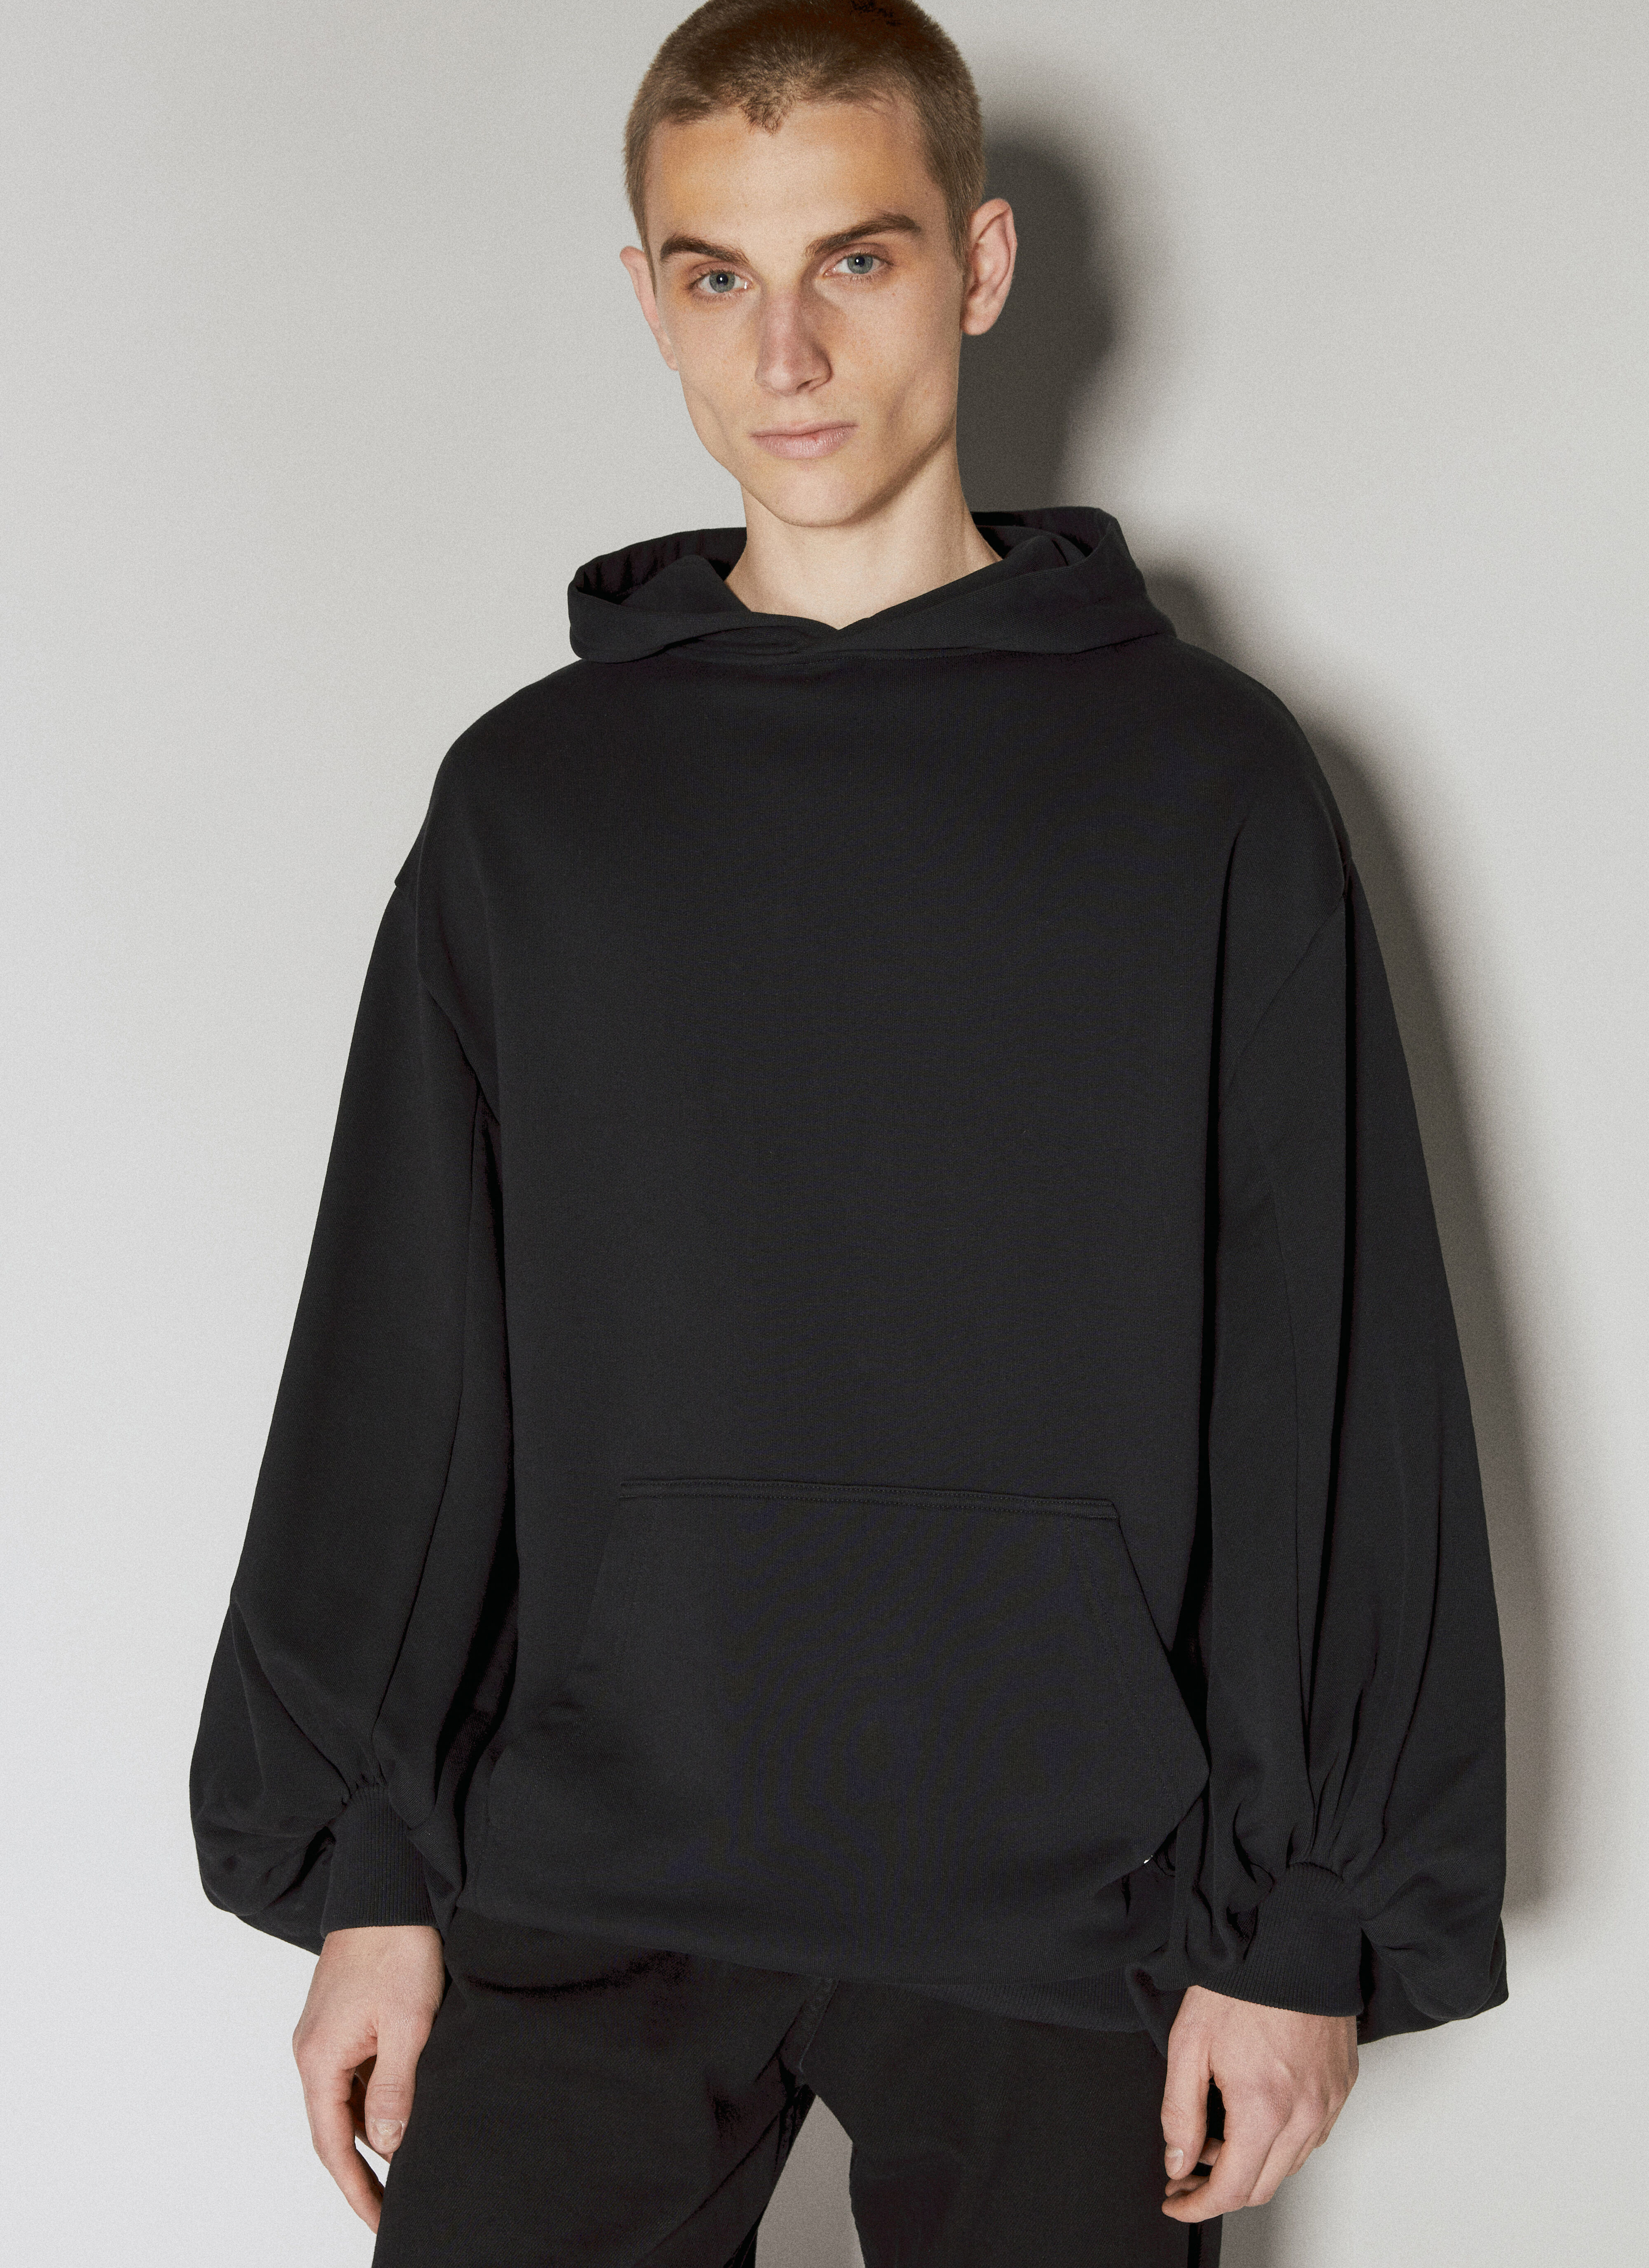 GmbH Exaggerated Sleeve Hooded Sweatshirt Black gmb0156013